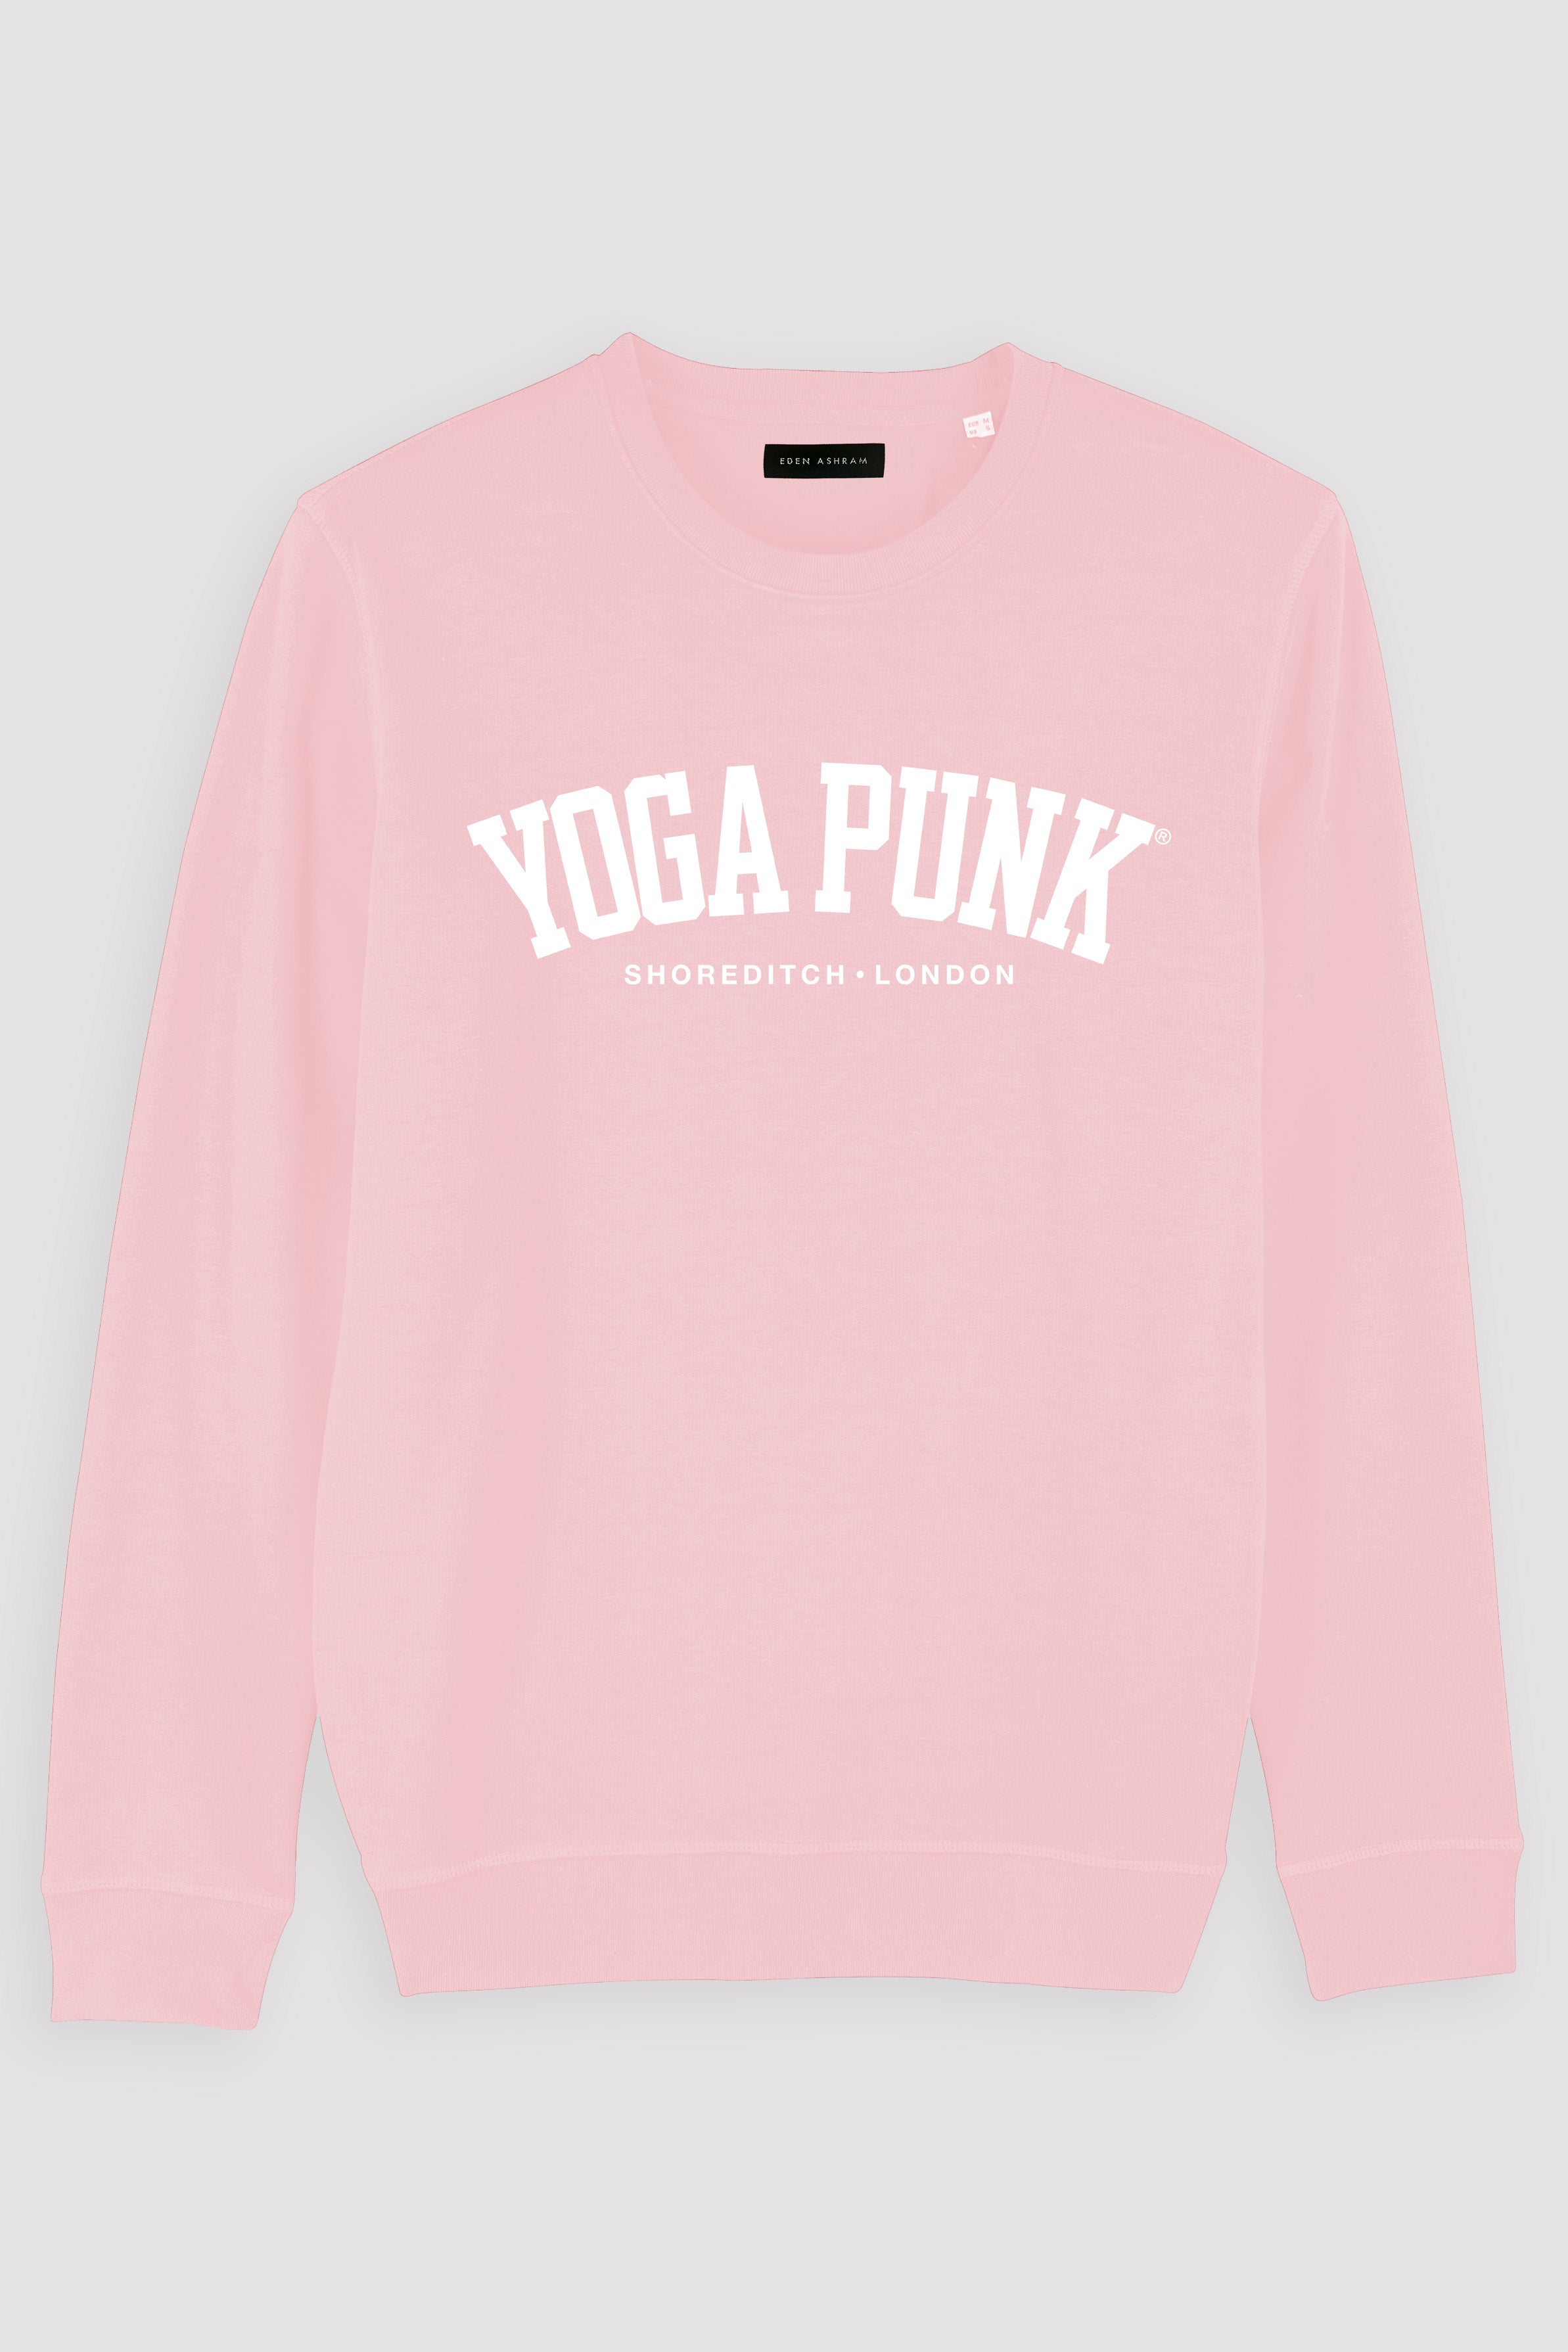 EDEN ASHRAM Yoga Punk Premium Crew Neck Sweatshirt Cotton Pink